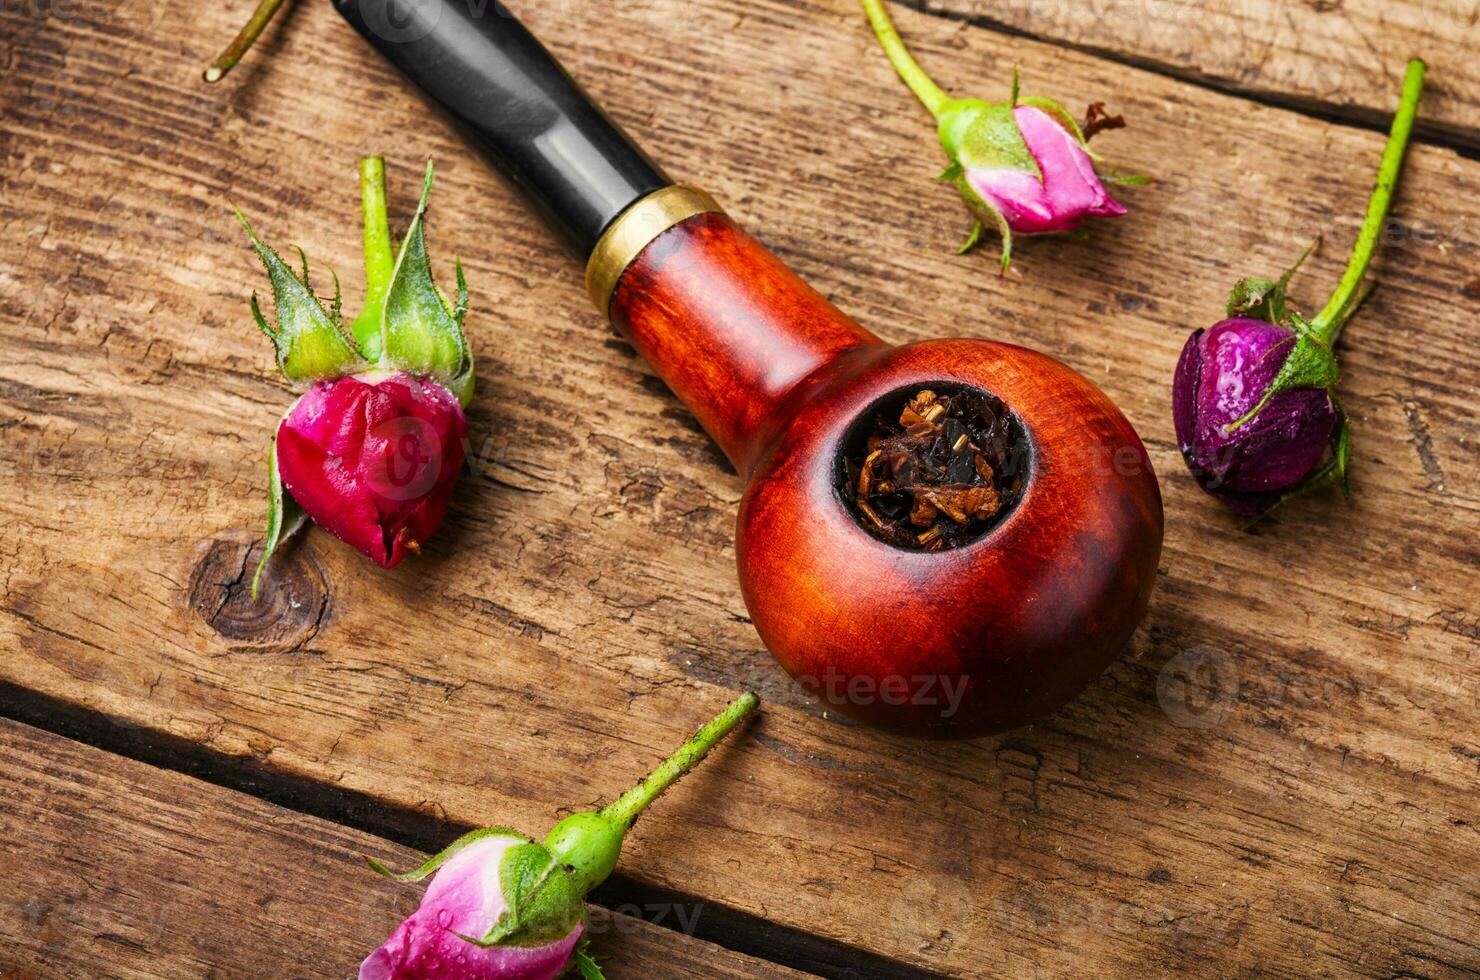 Smoking rose-flavored tobacco photo